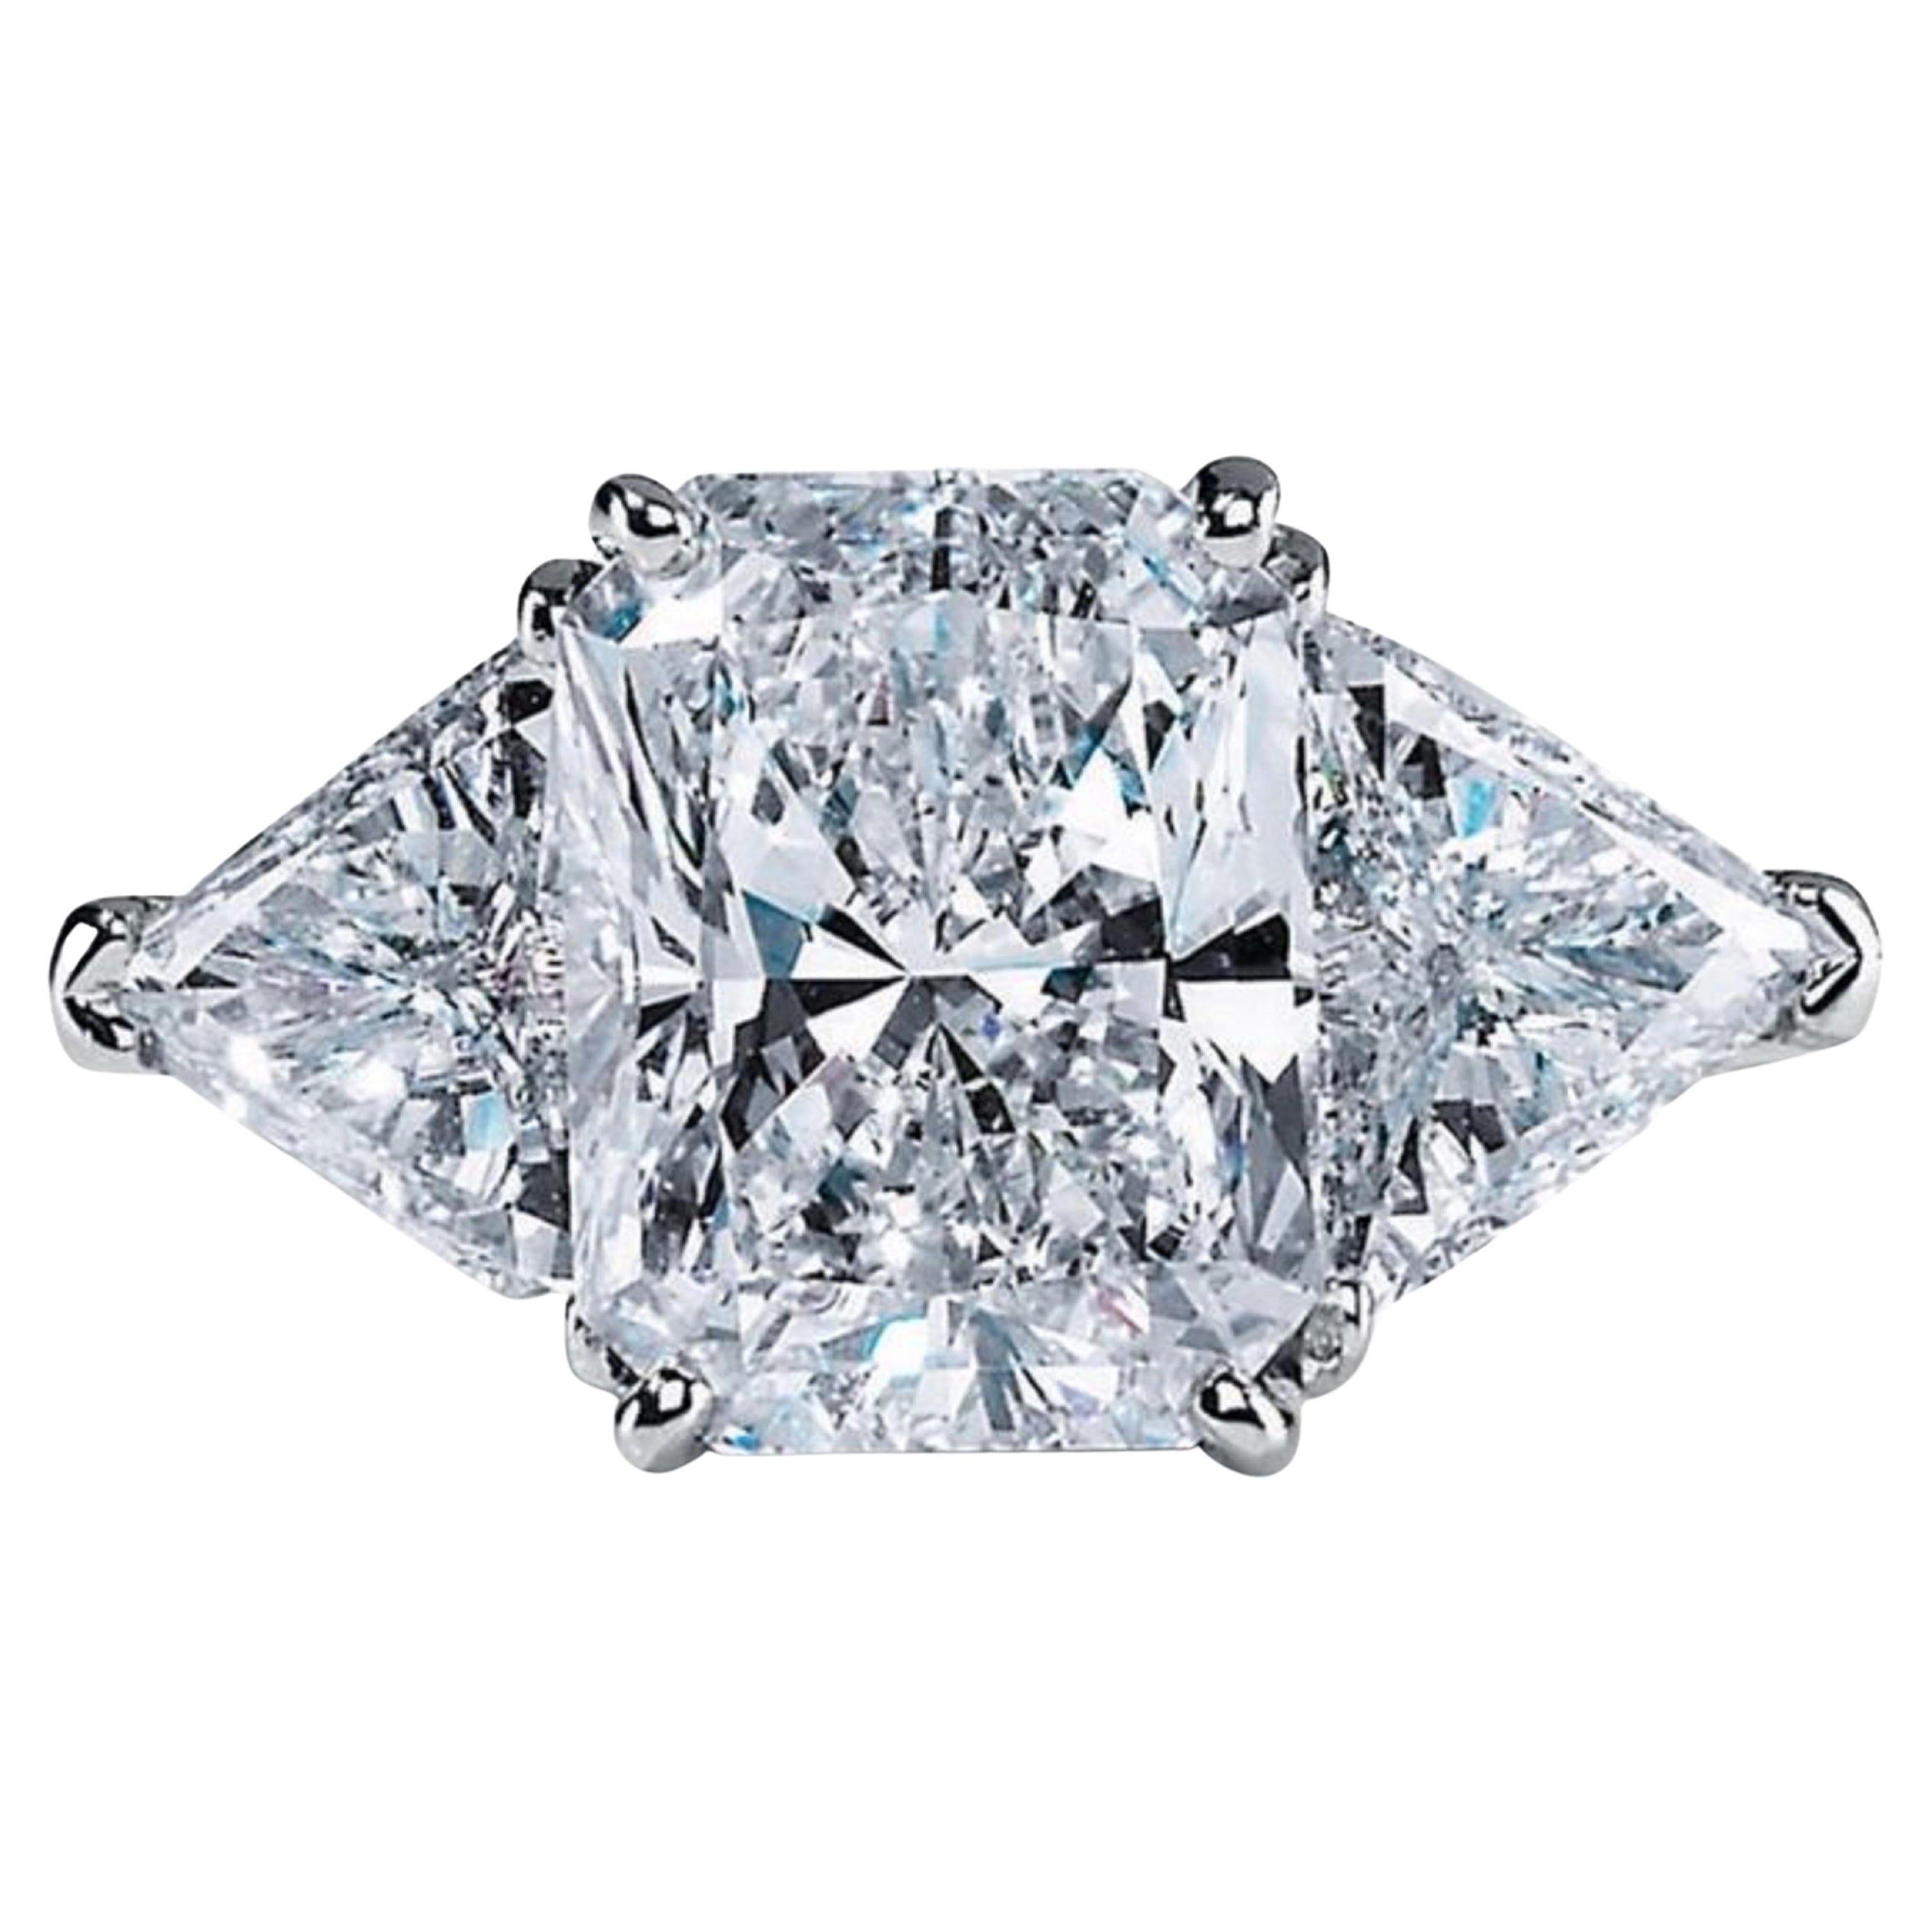 GIA Certified Three Stone Radiant Trillion Cut Diamond Ring